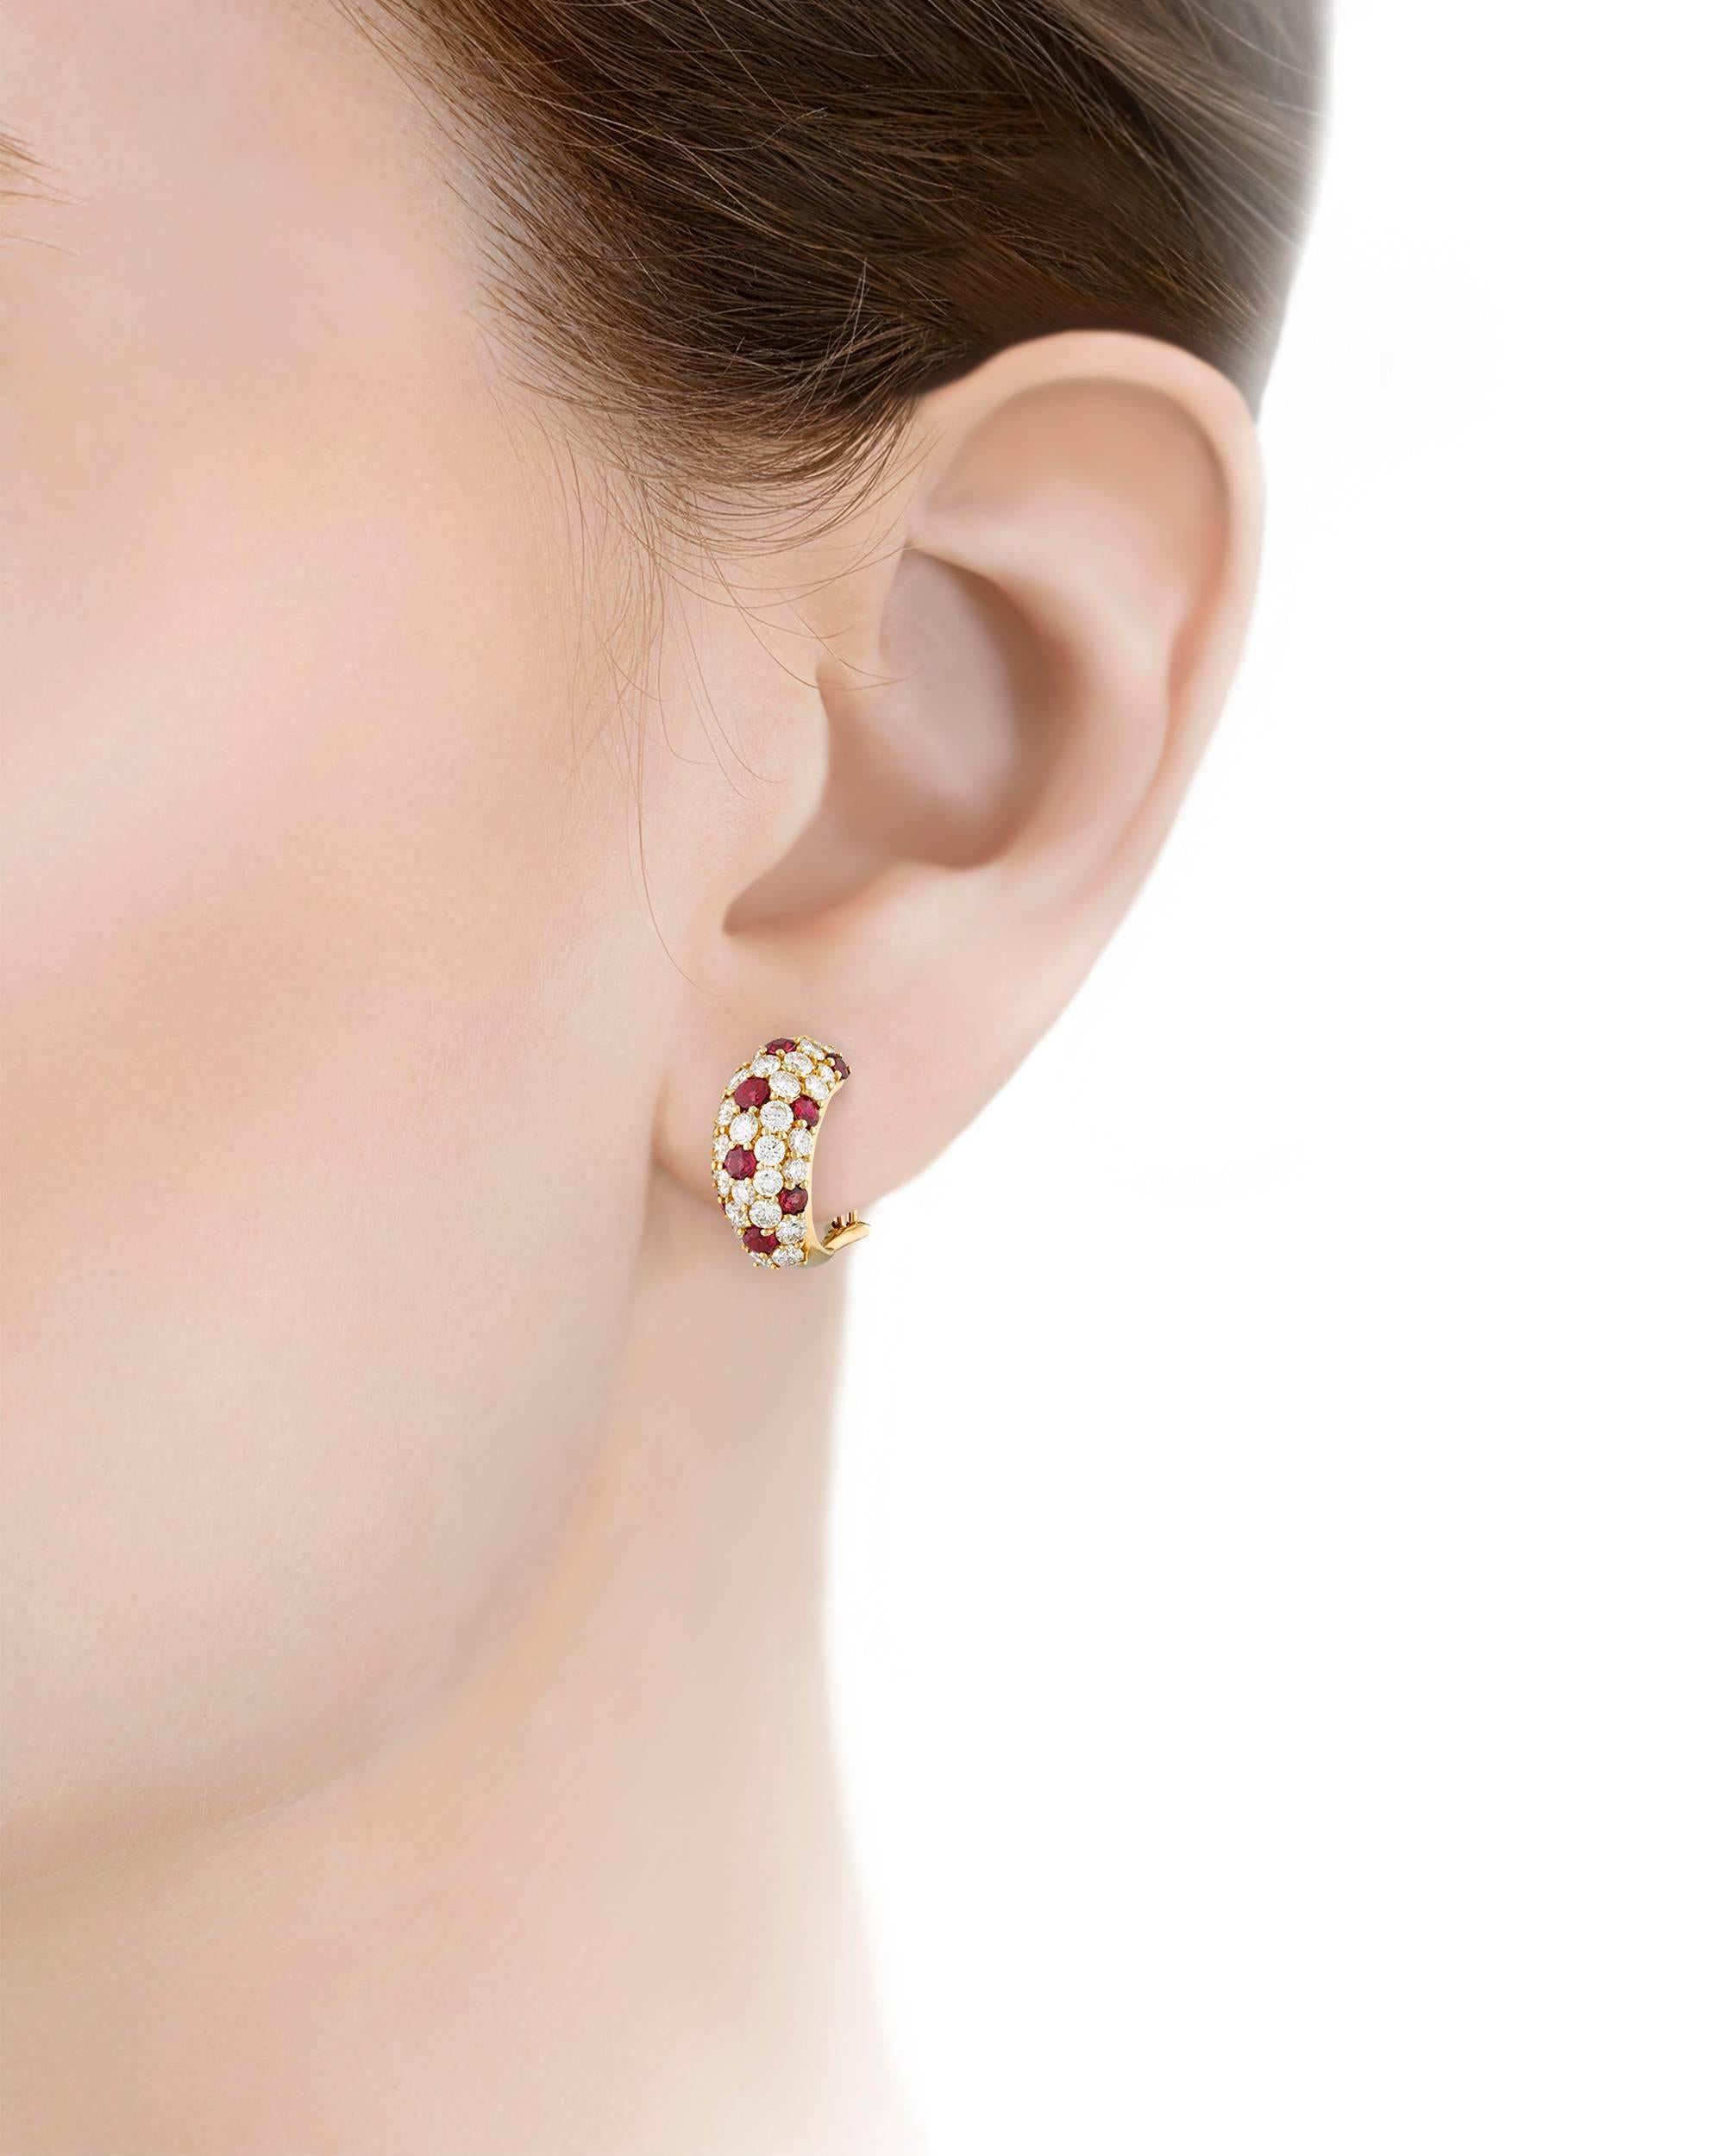 Modern Ruby and Diamond Cuff Earrings by Tiffany & Co.